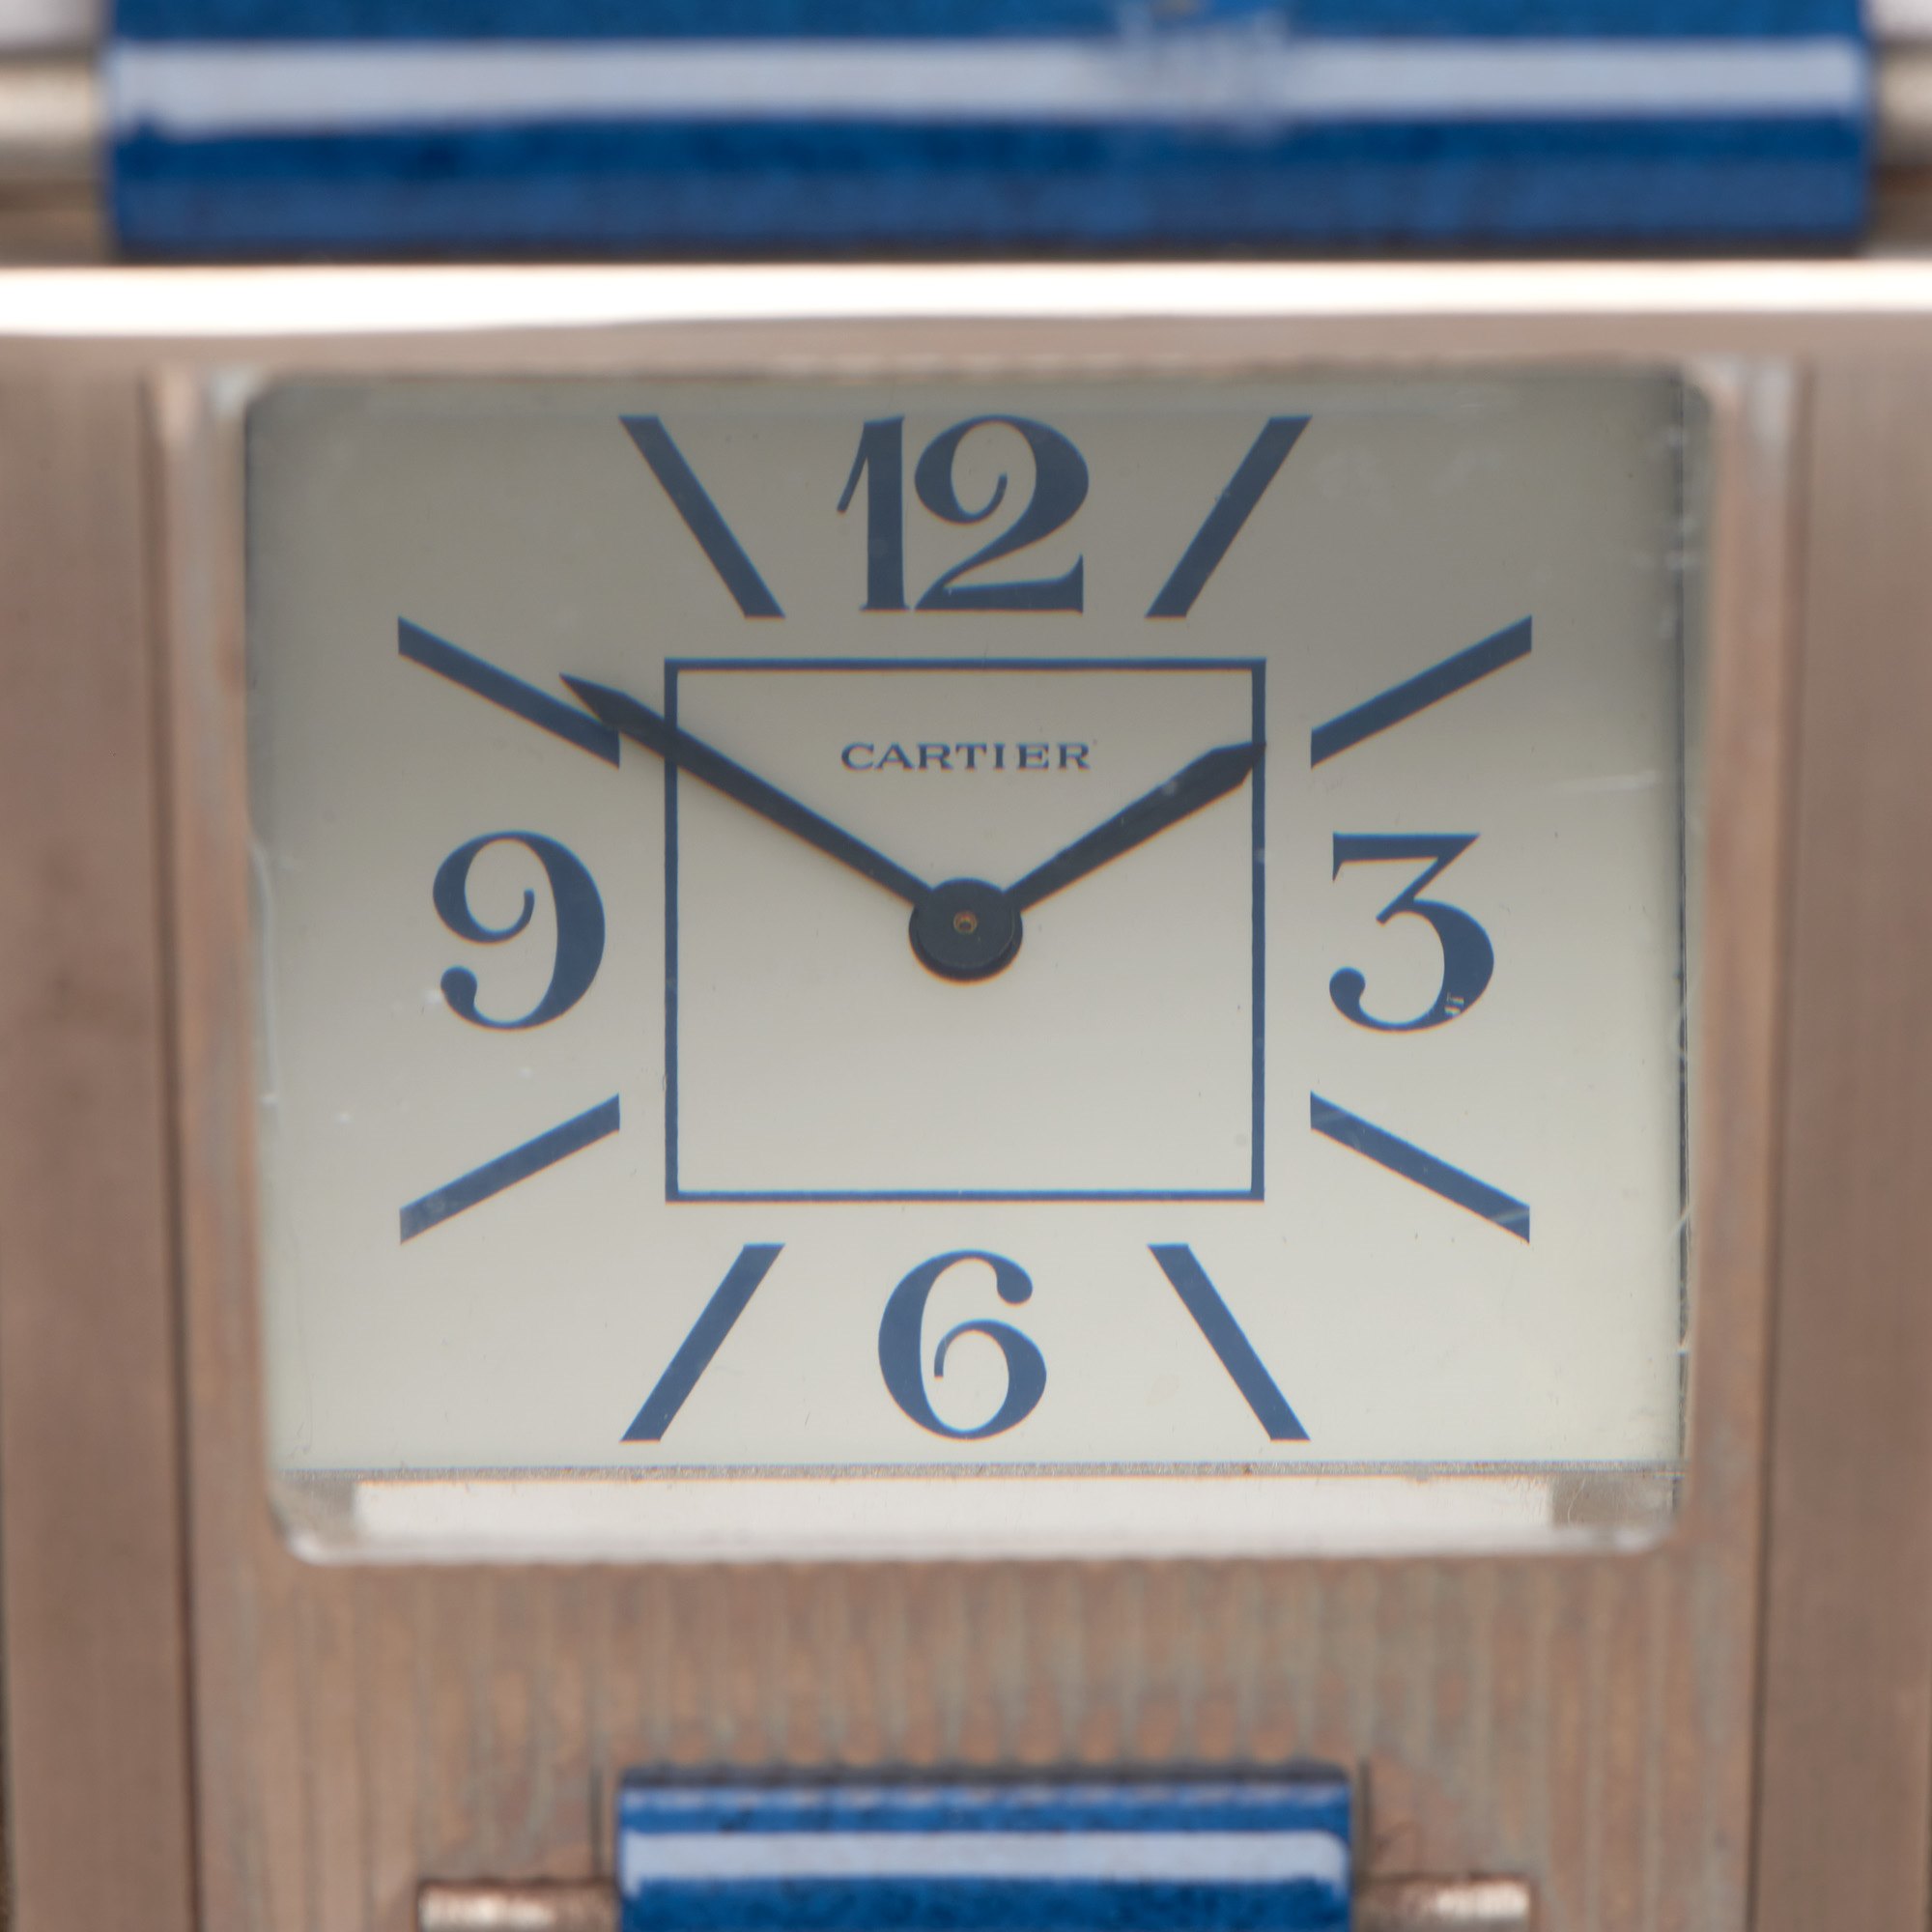 Cartier Travel Desk Clock Cartier Paris 'Mystery' Silver Plated Double Desk Clock 9118